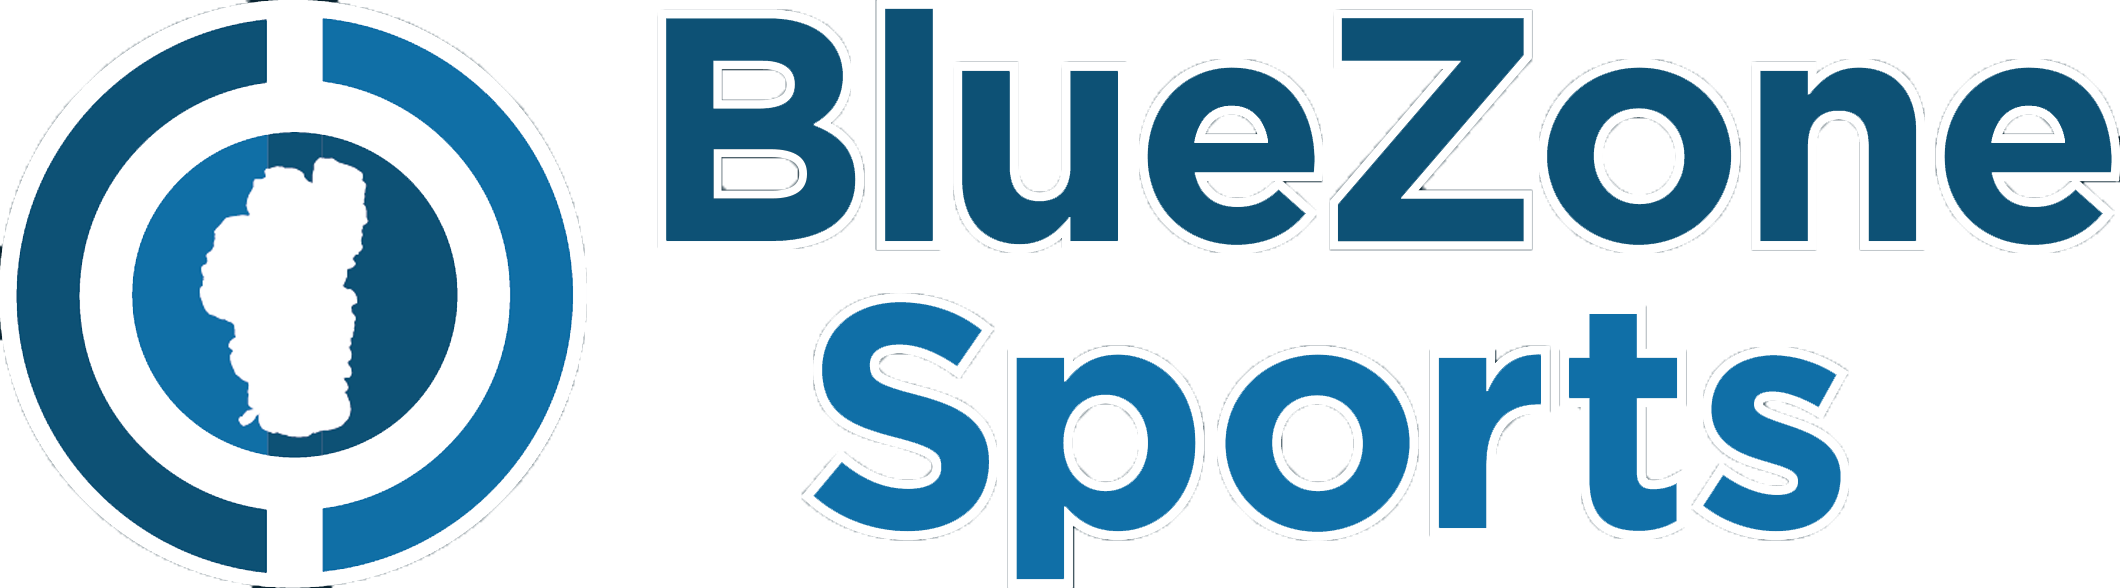 BlueZone Sports